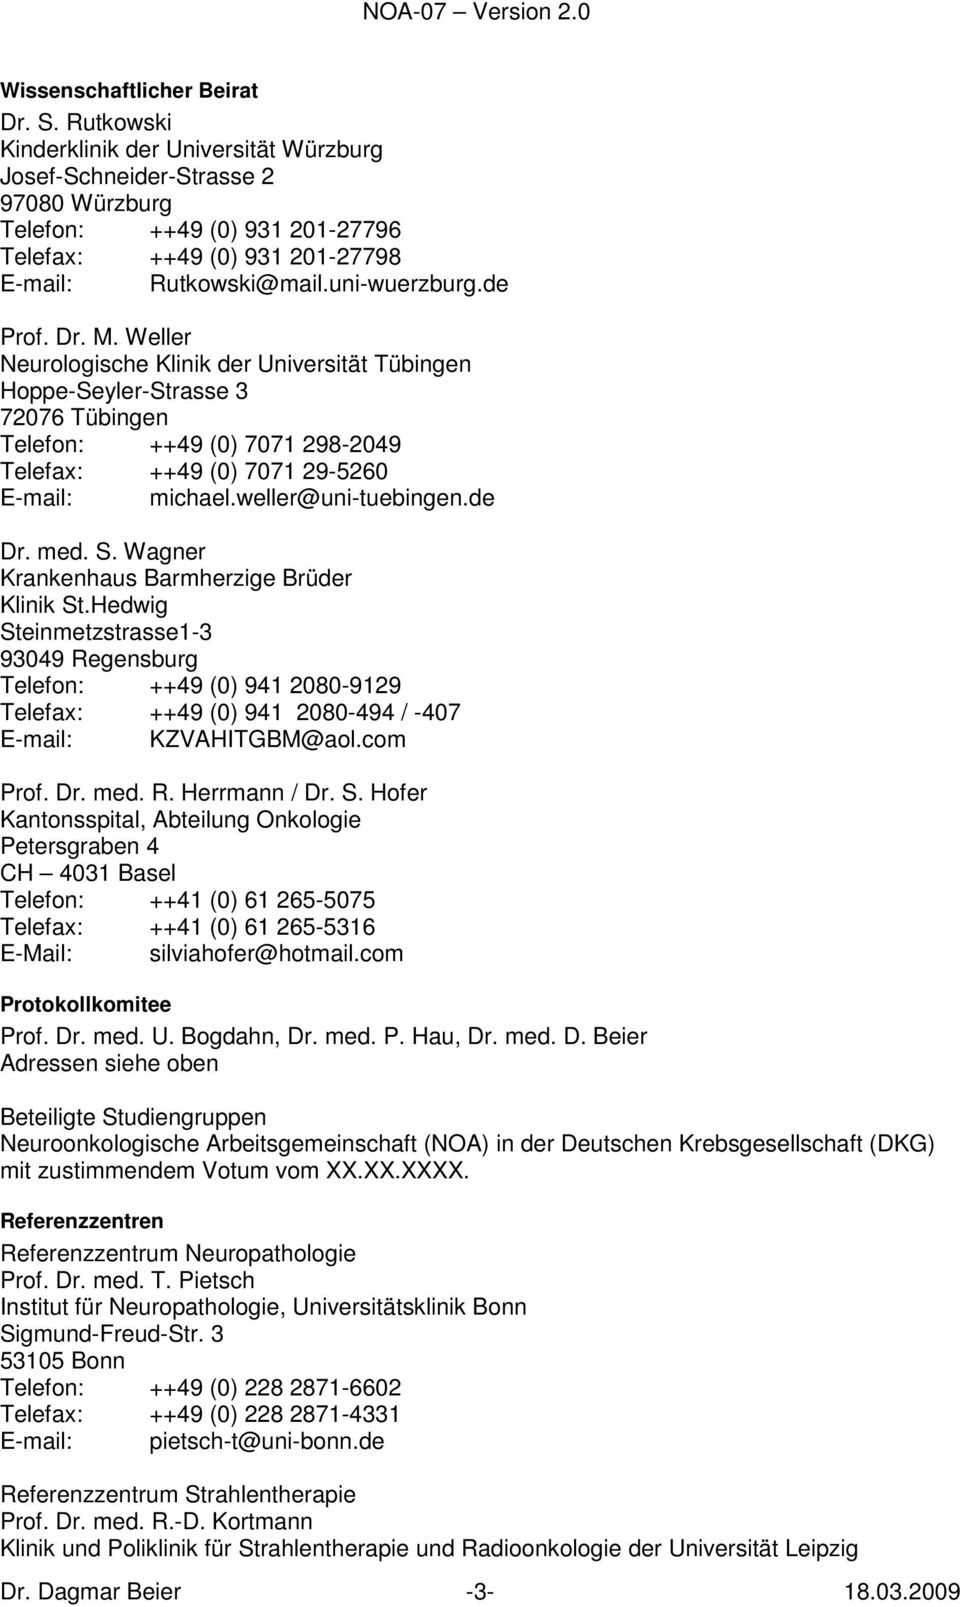 Dr. M. Weller Neurologische Klinik der Universität Tübingen Hoppe-Seyler-Strasse 3 72076 Tübingen Telefon: ++49 (0) 7071 298-2049 Telefax: ++49 (0) 7071 29-5260 E-mail: michael.weller@uni-tuebingen.